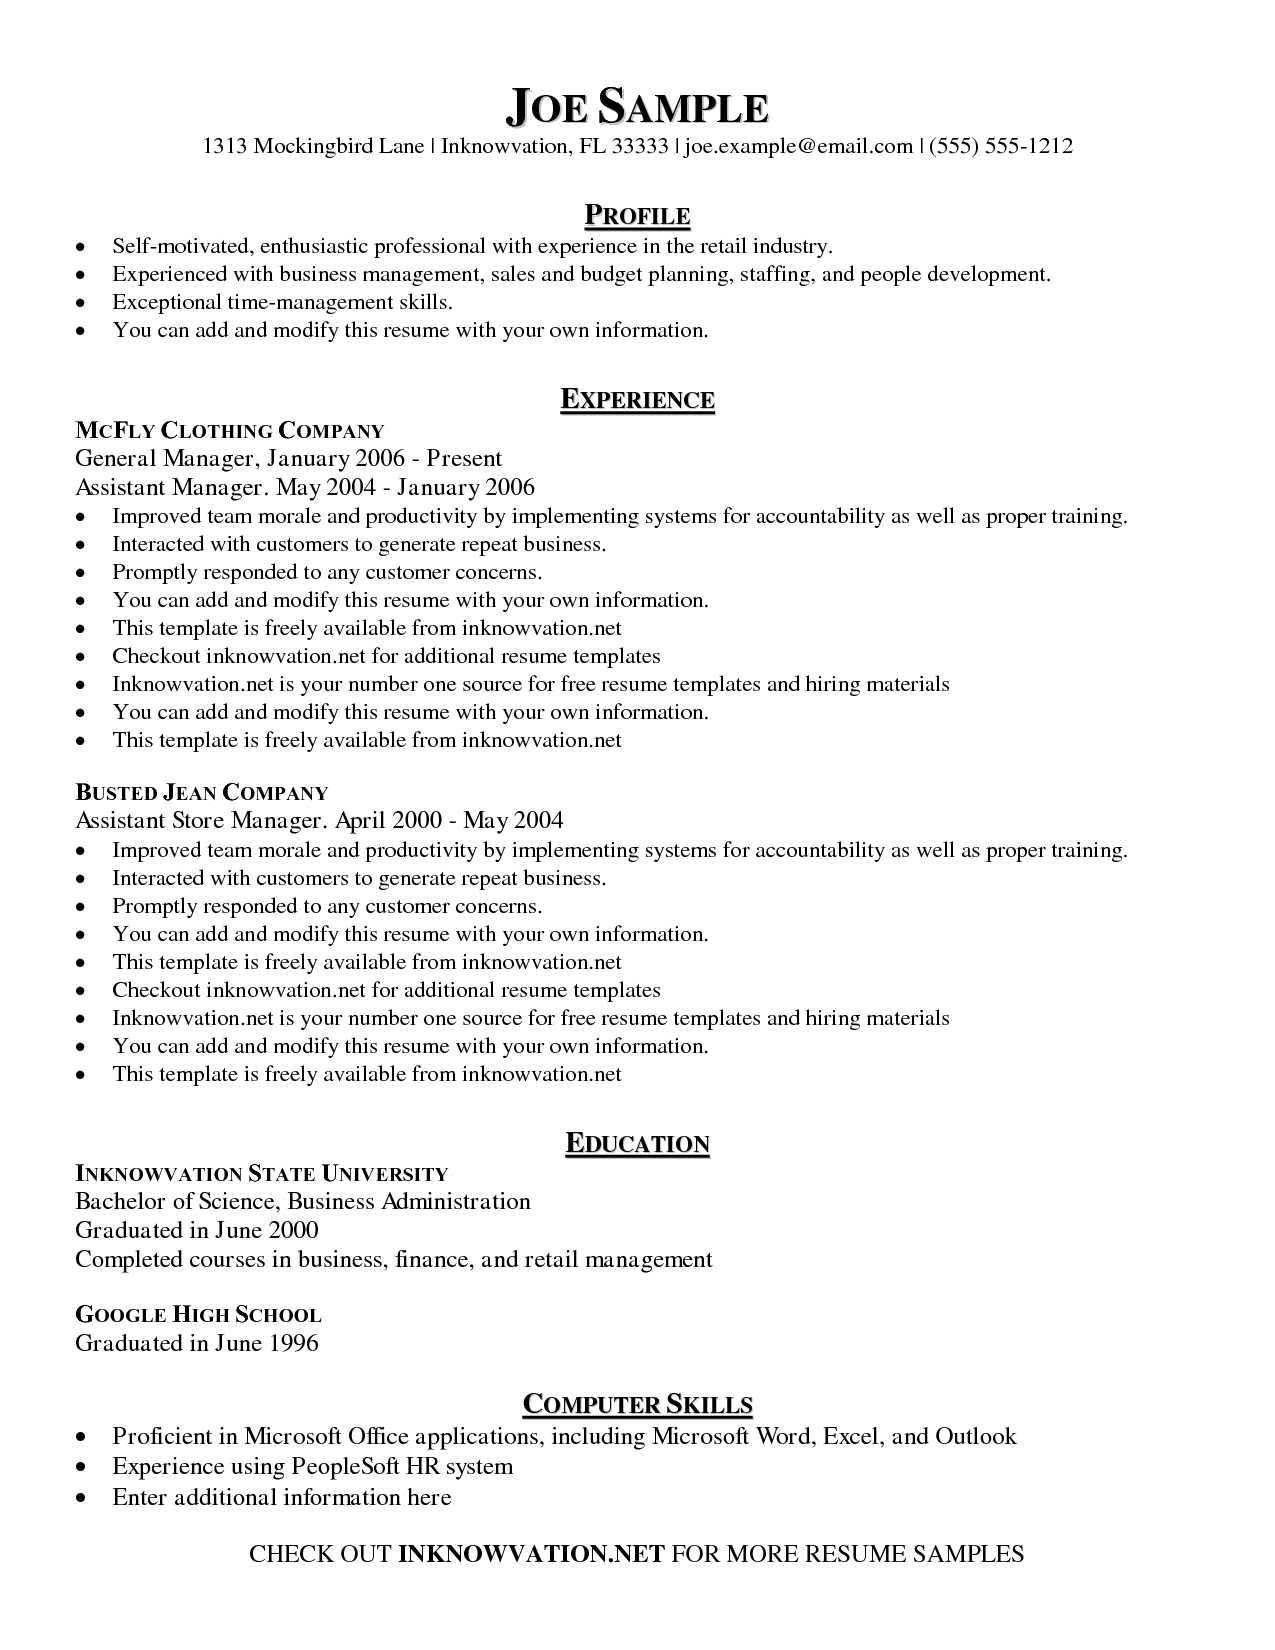 Printable Sample Resume | Room Surf Intended For Free Printable Resume Templates Microsoft Word